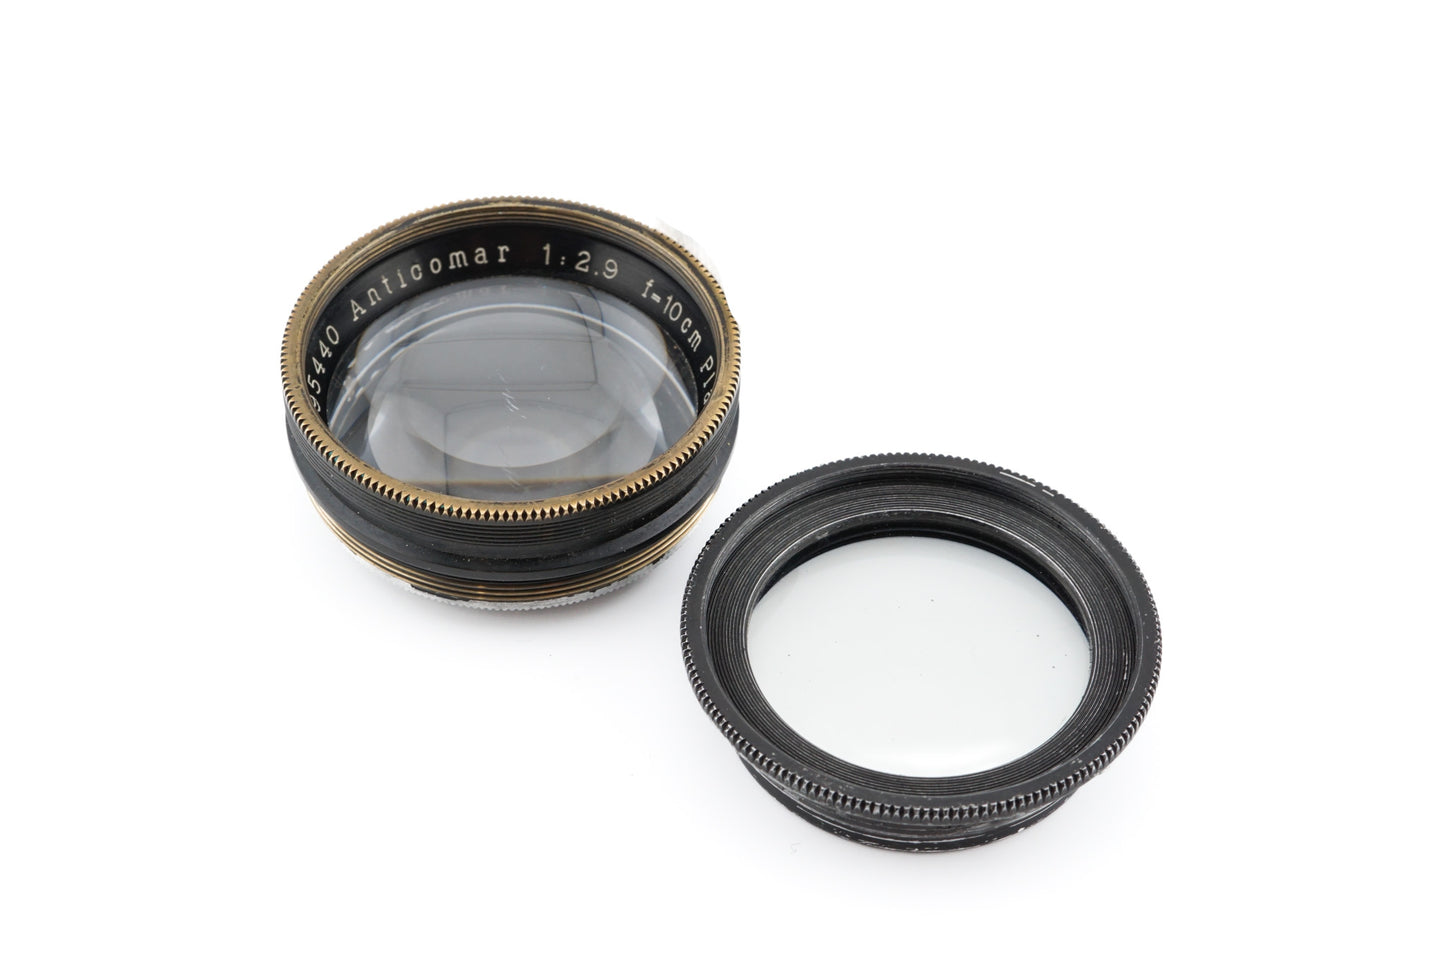 Plaubel 100mm f2.9 Anticomar - Lens